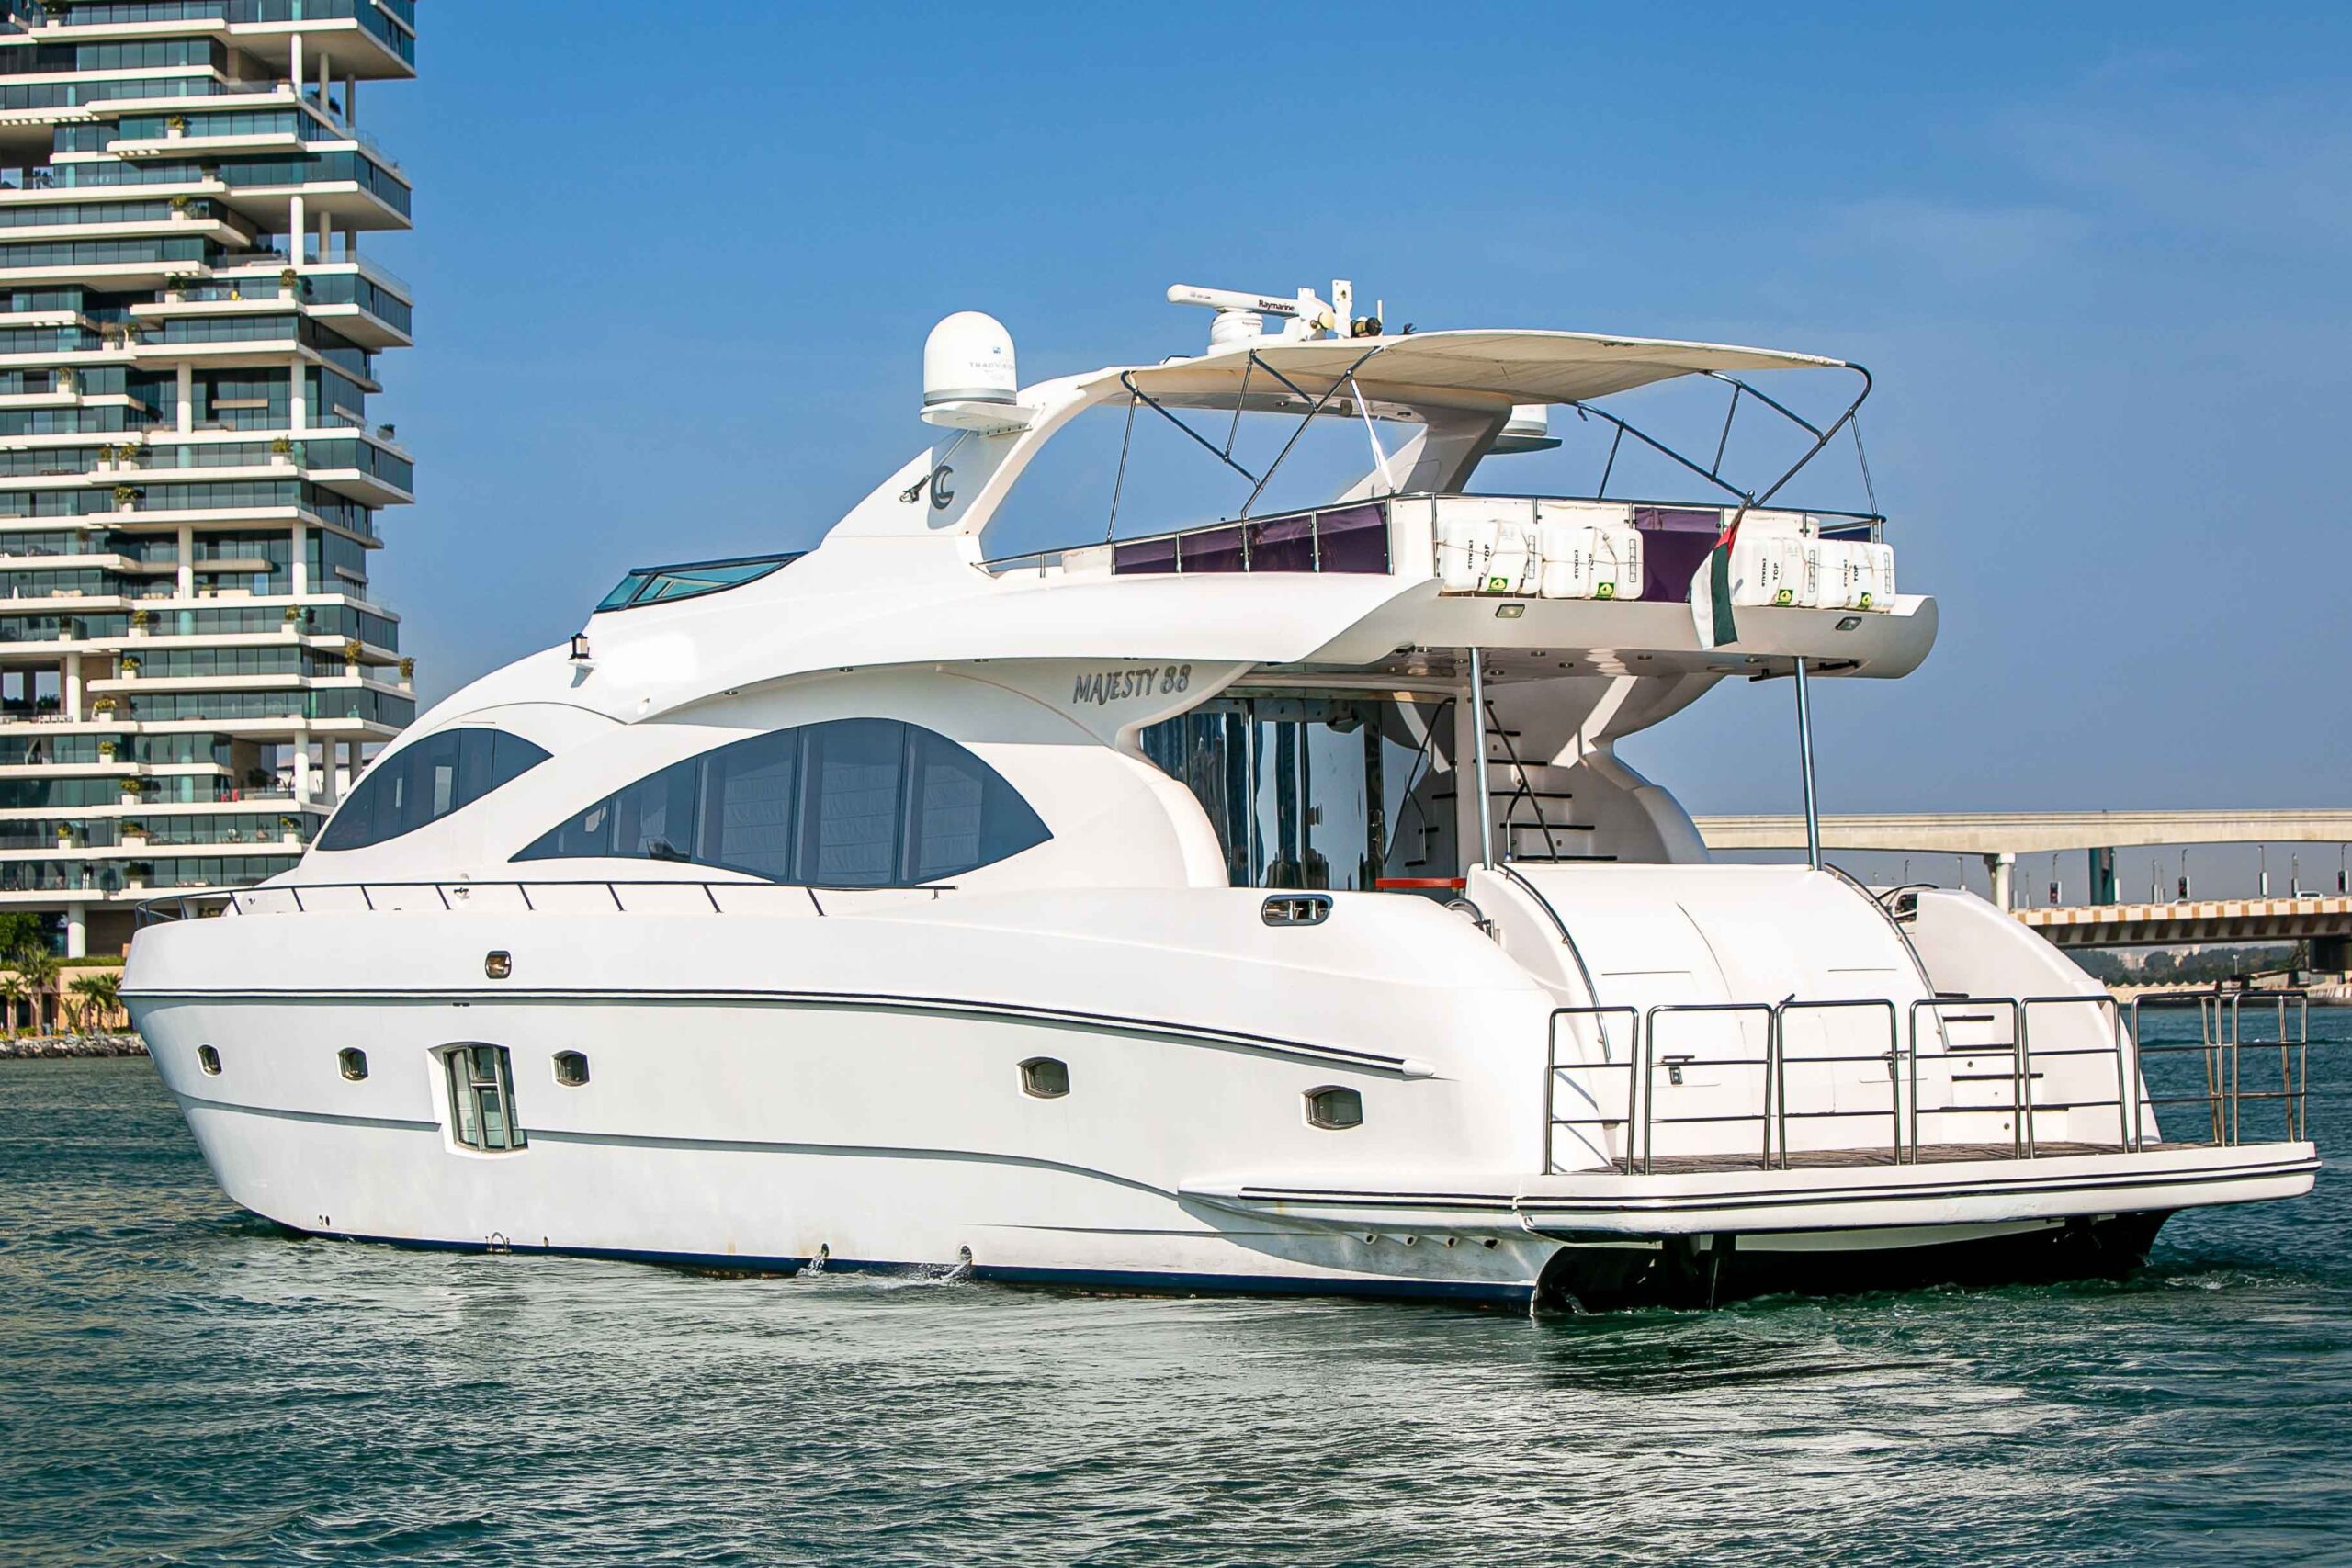 Voyager Elite Maestro 88ft Yacht yacht with best price in Dubai